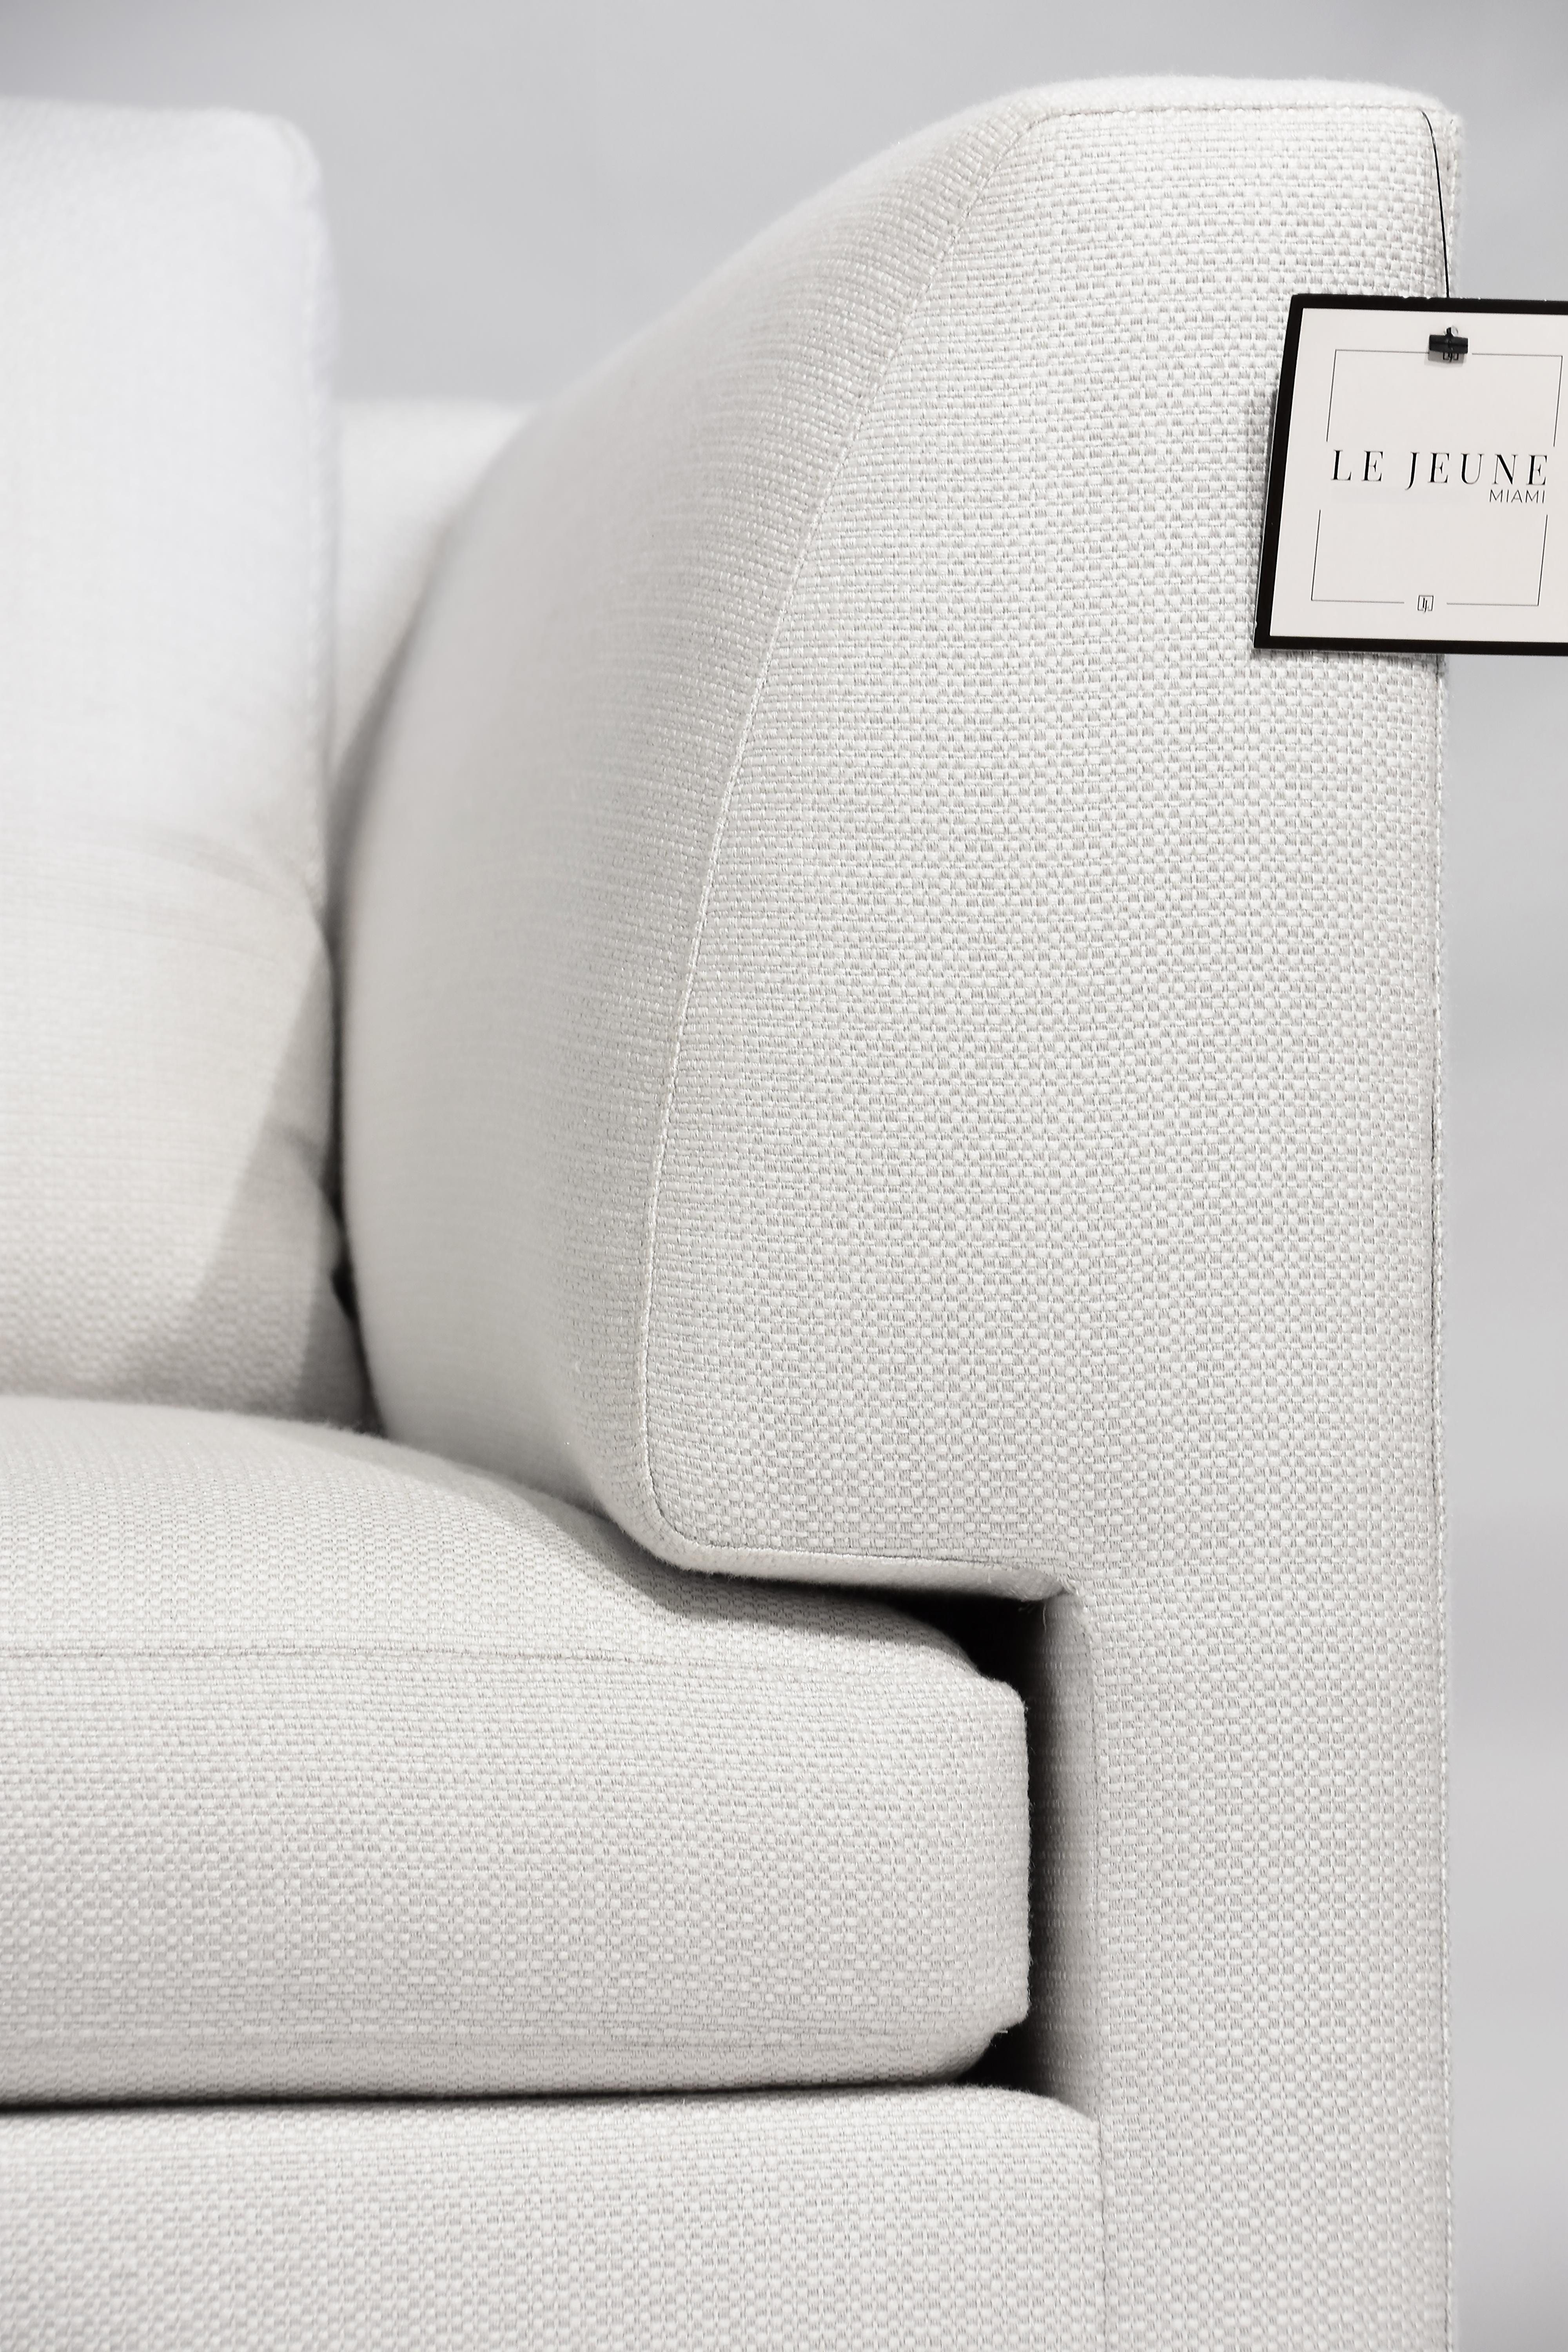 Le Jeune Upholstery Ashley 3 Seat Sofa in Light Gray Floor Model For Sale 1